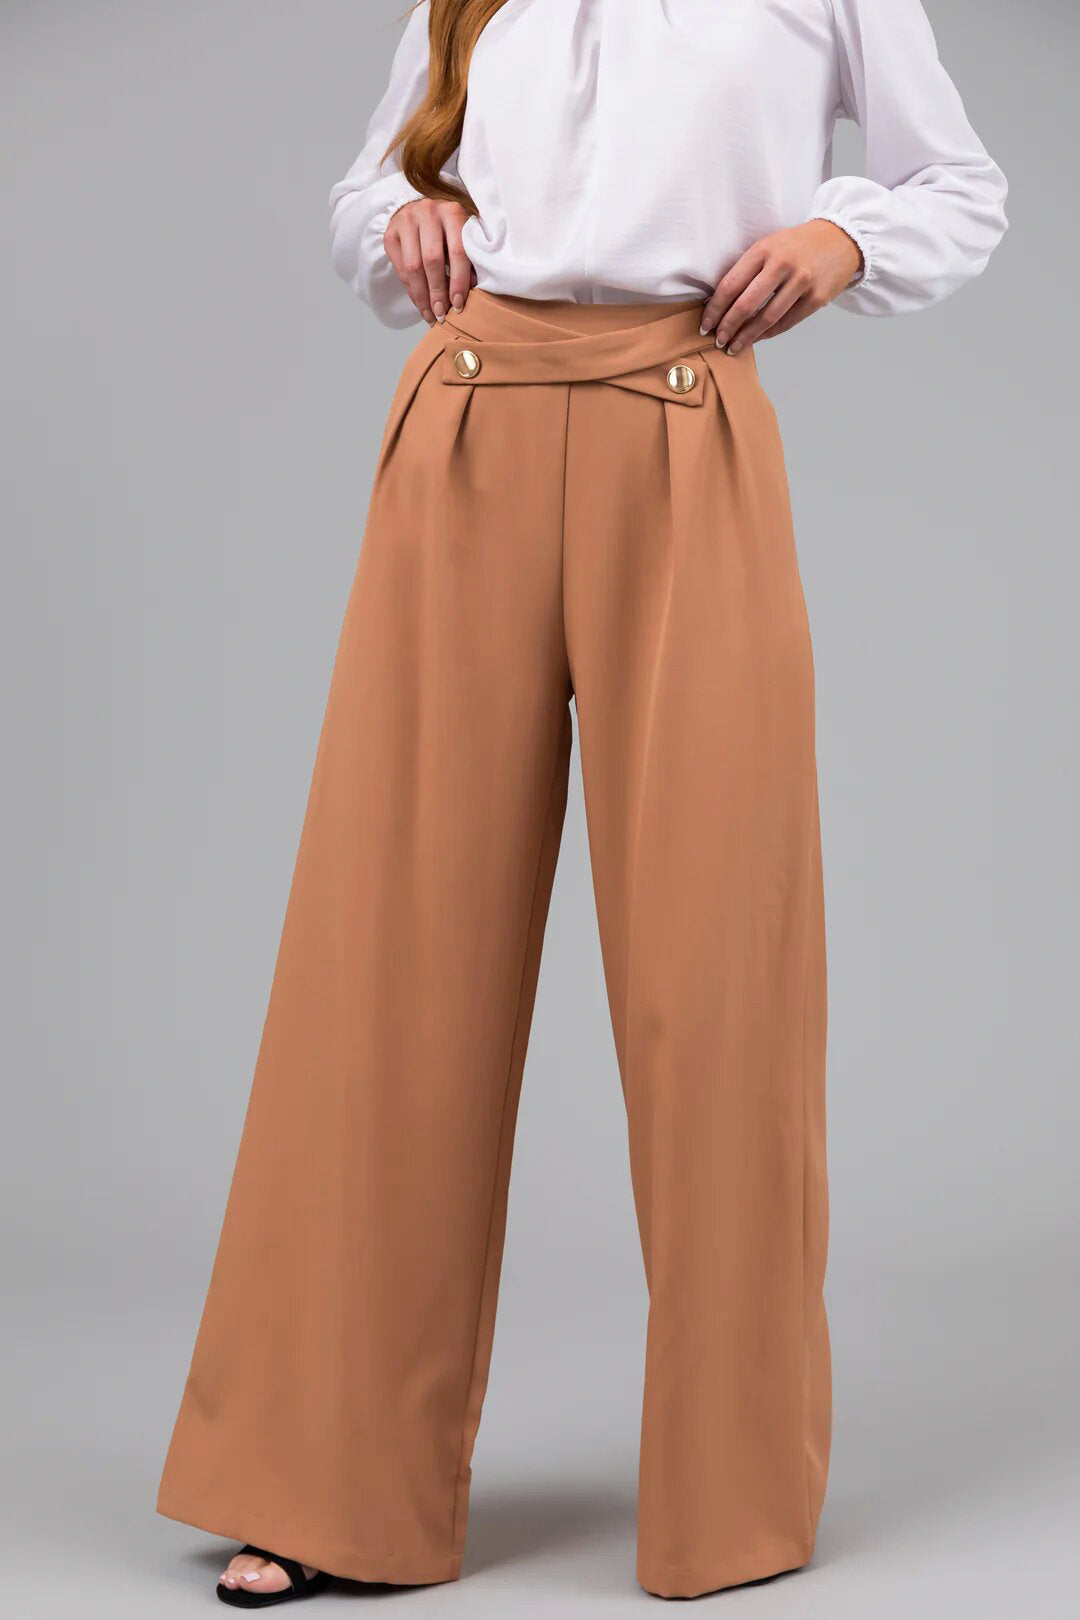 Women's Classy Creative Casual Fashion Loose Pants